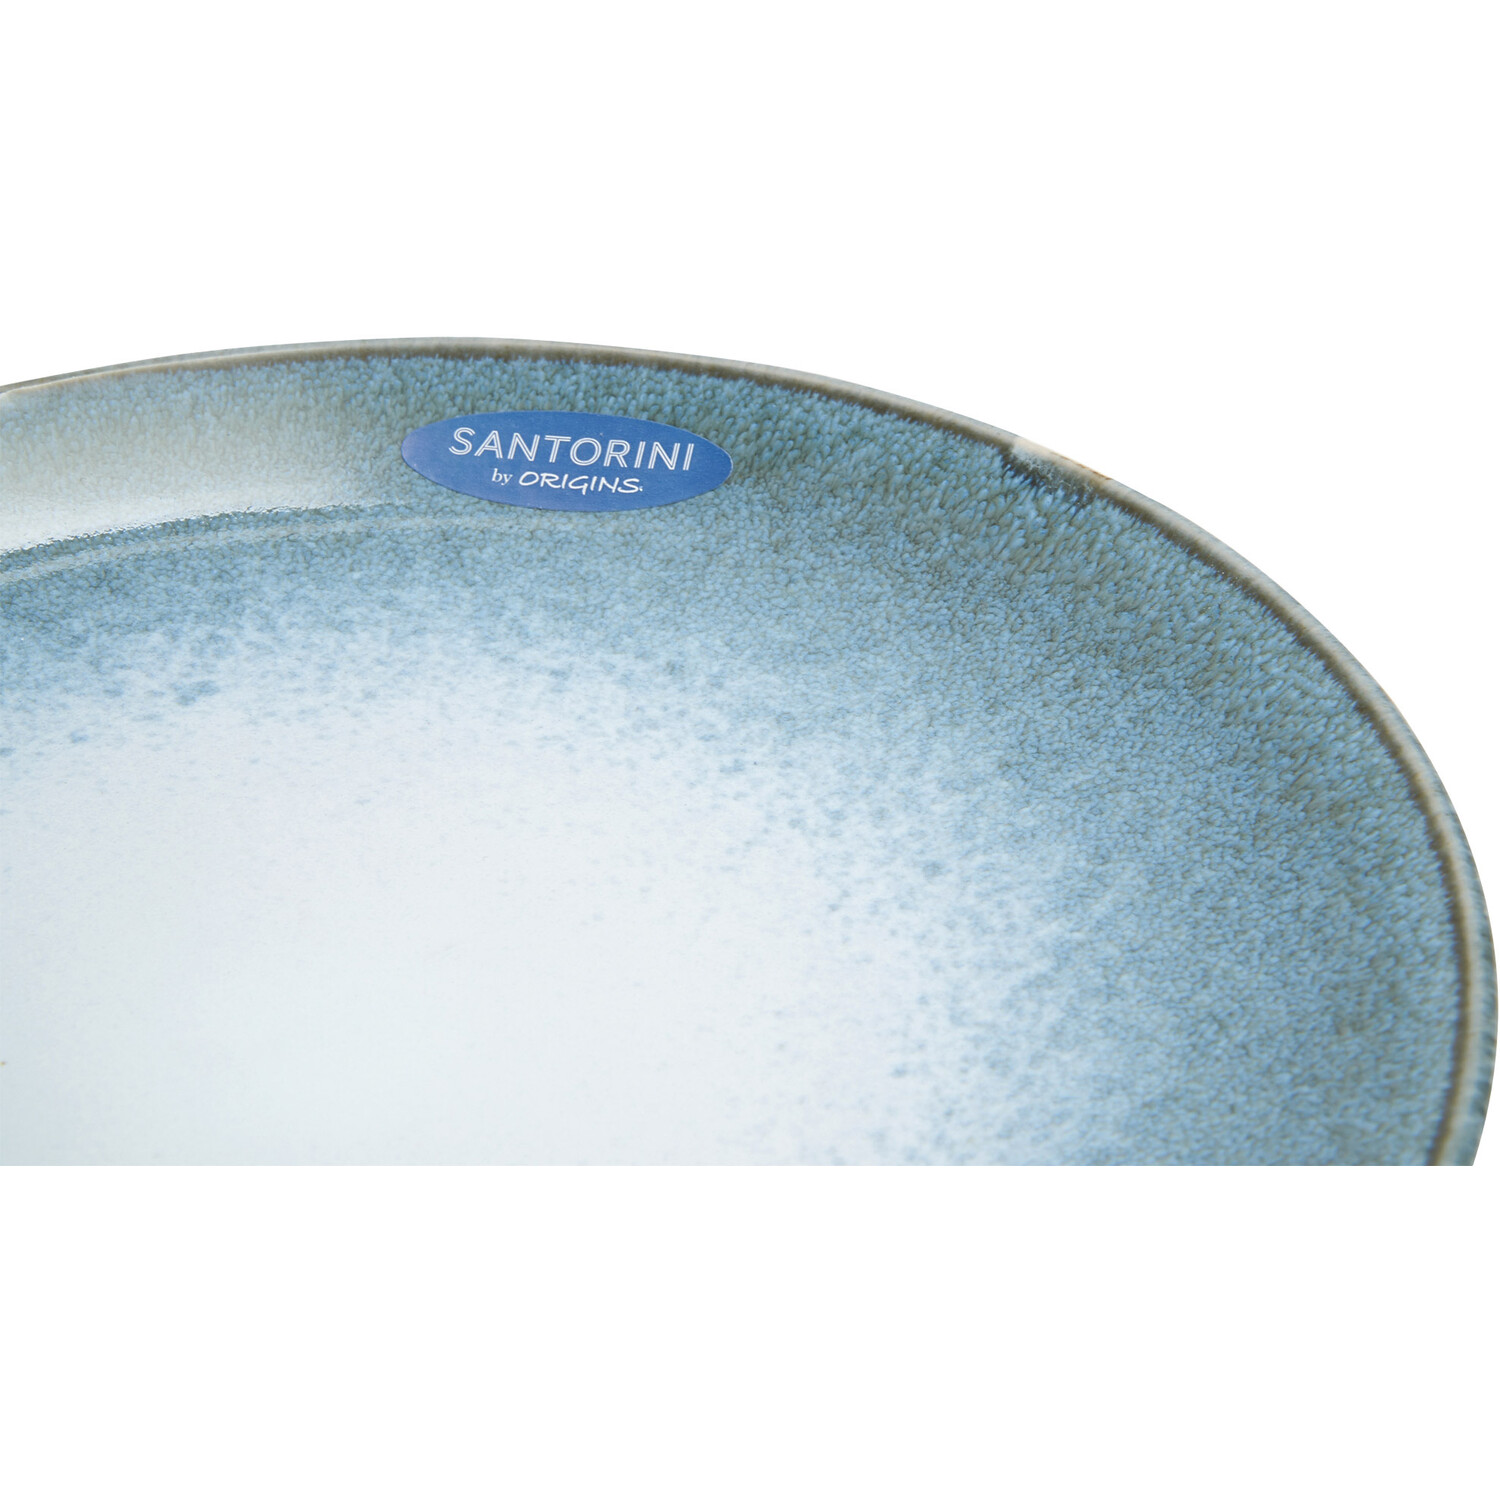 Santorini Reactive Glaze Plate - Blue Image 3